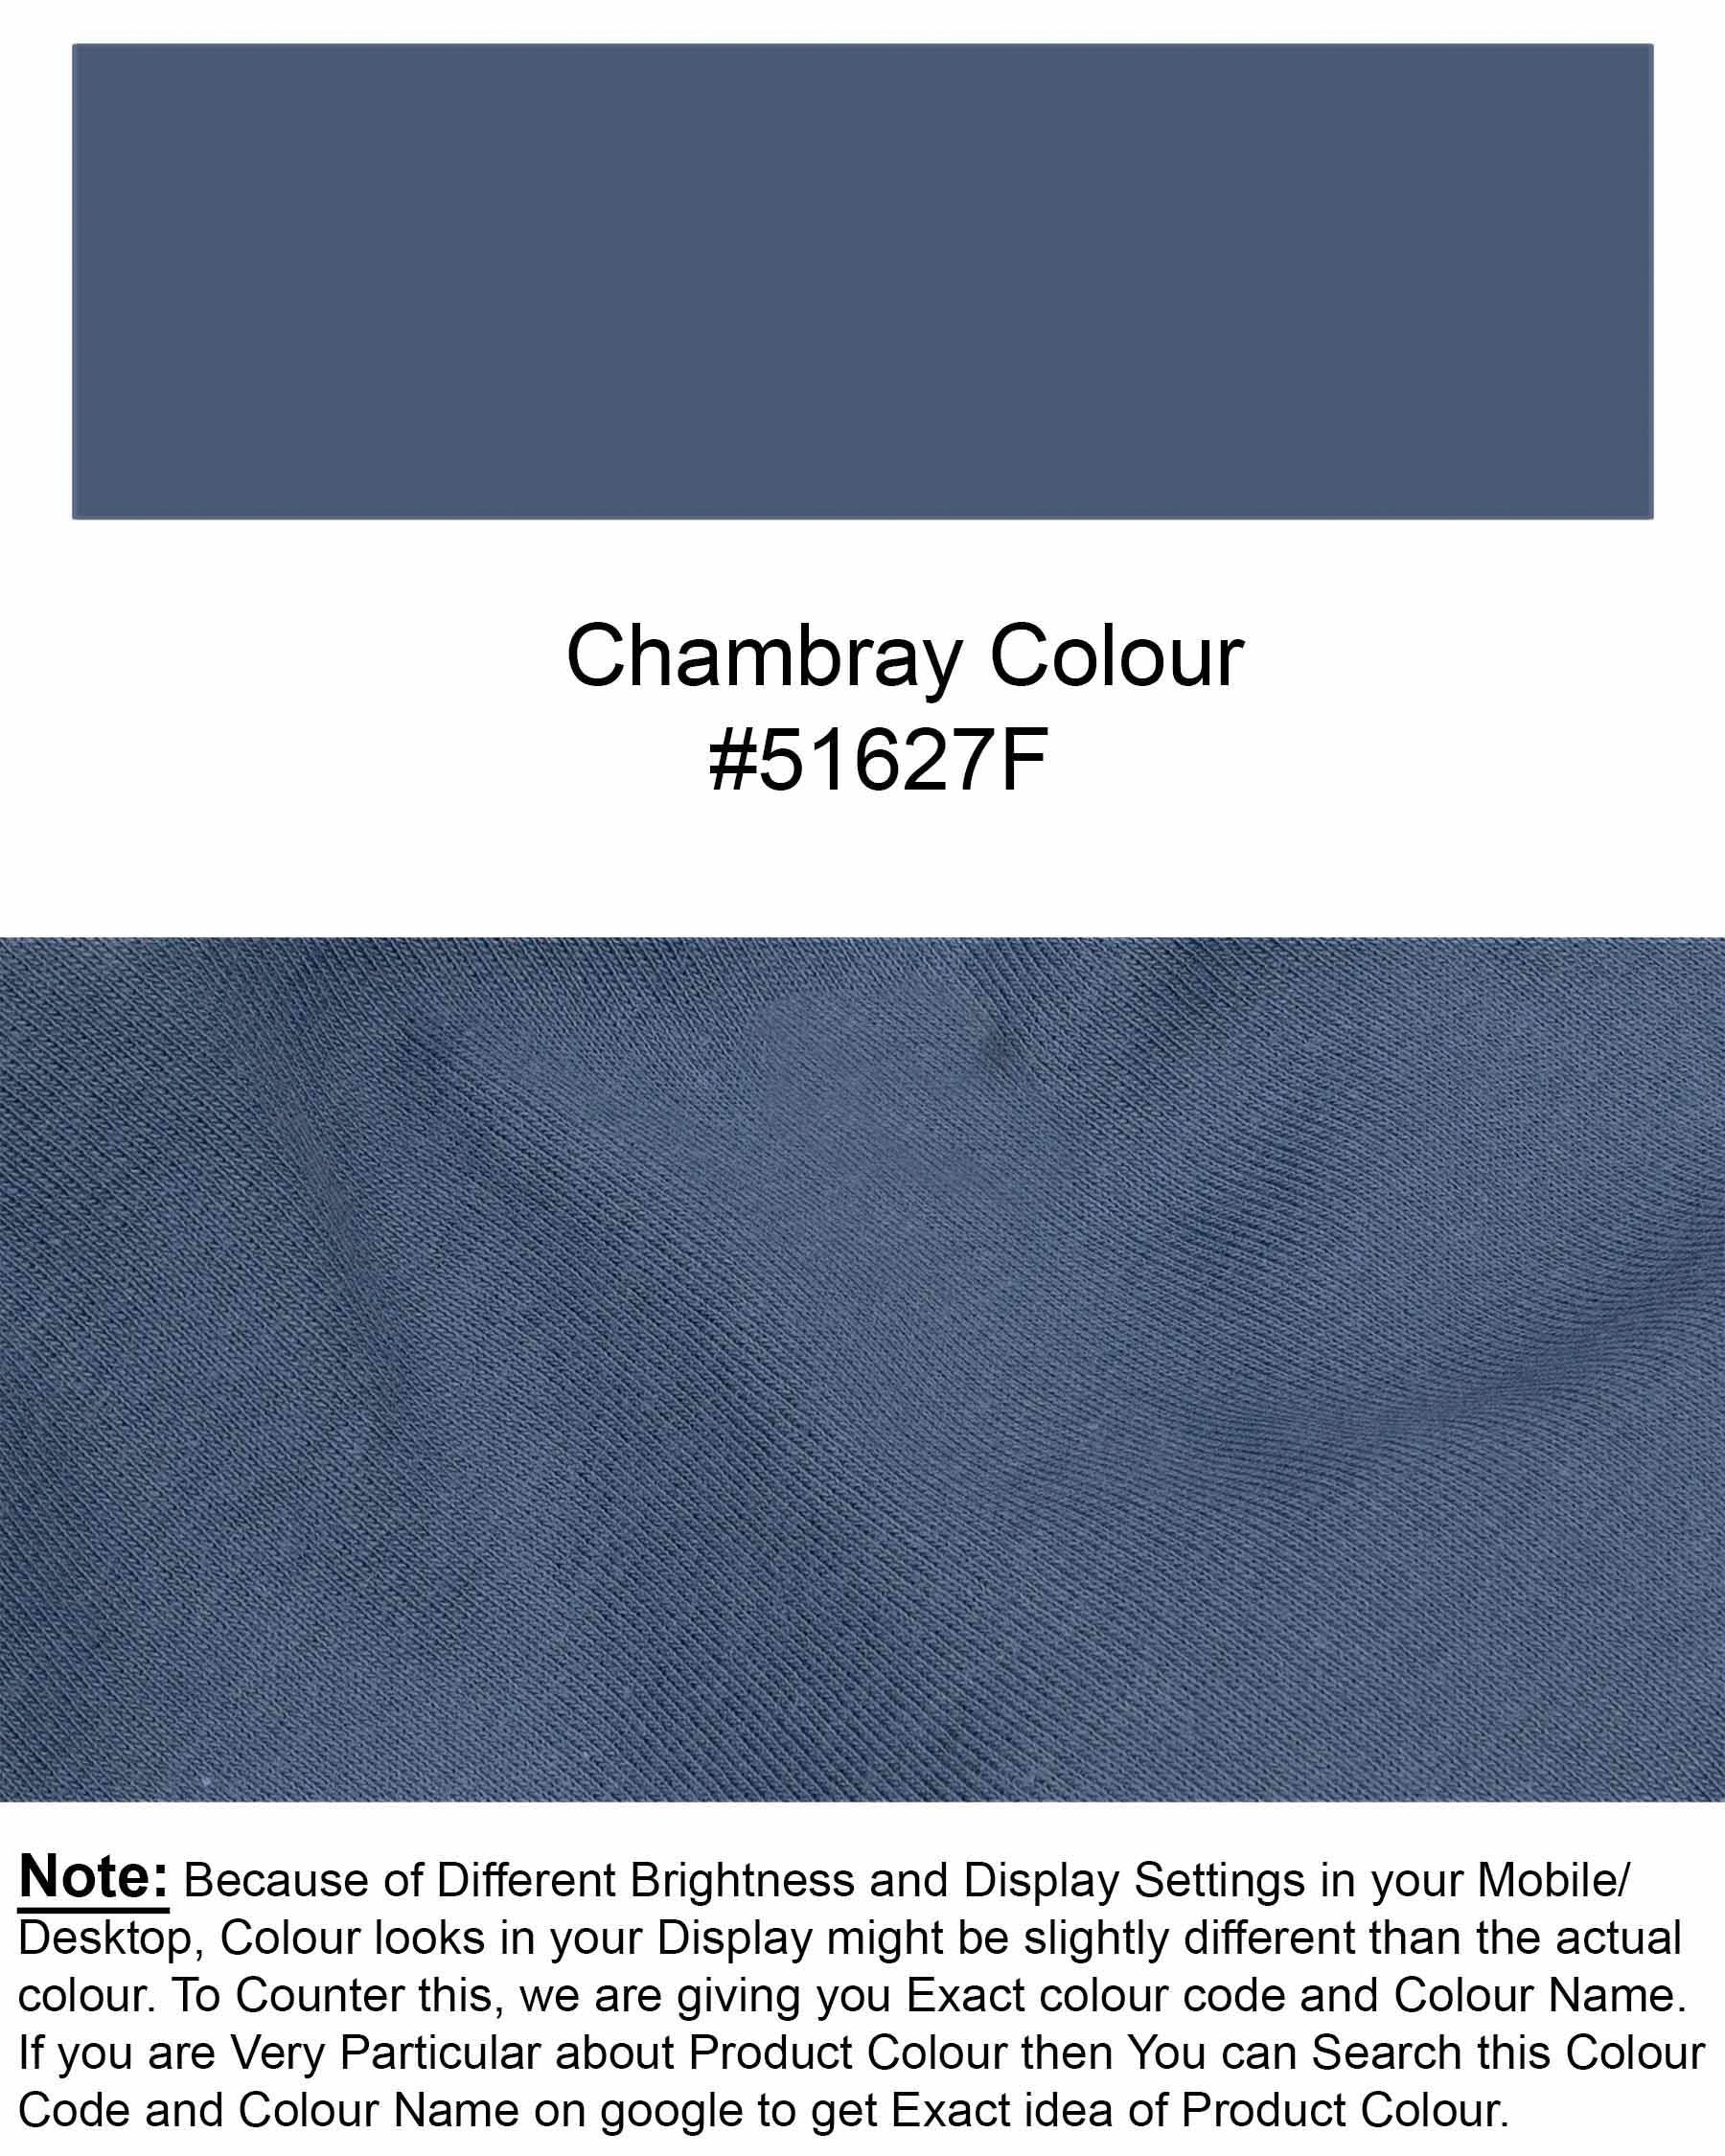 Chambray Blue Full Sleeve Premium Cotton Jersey Sweatshirt TS439-S, TS439-M, TS439-L, TS439-XL, TS439-XXL